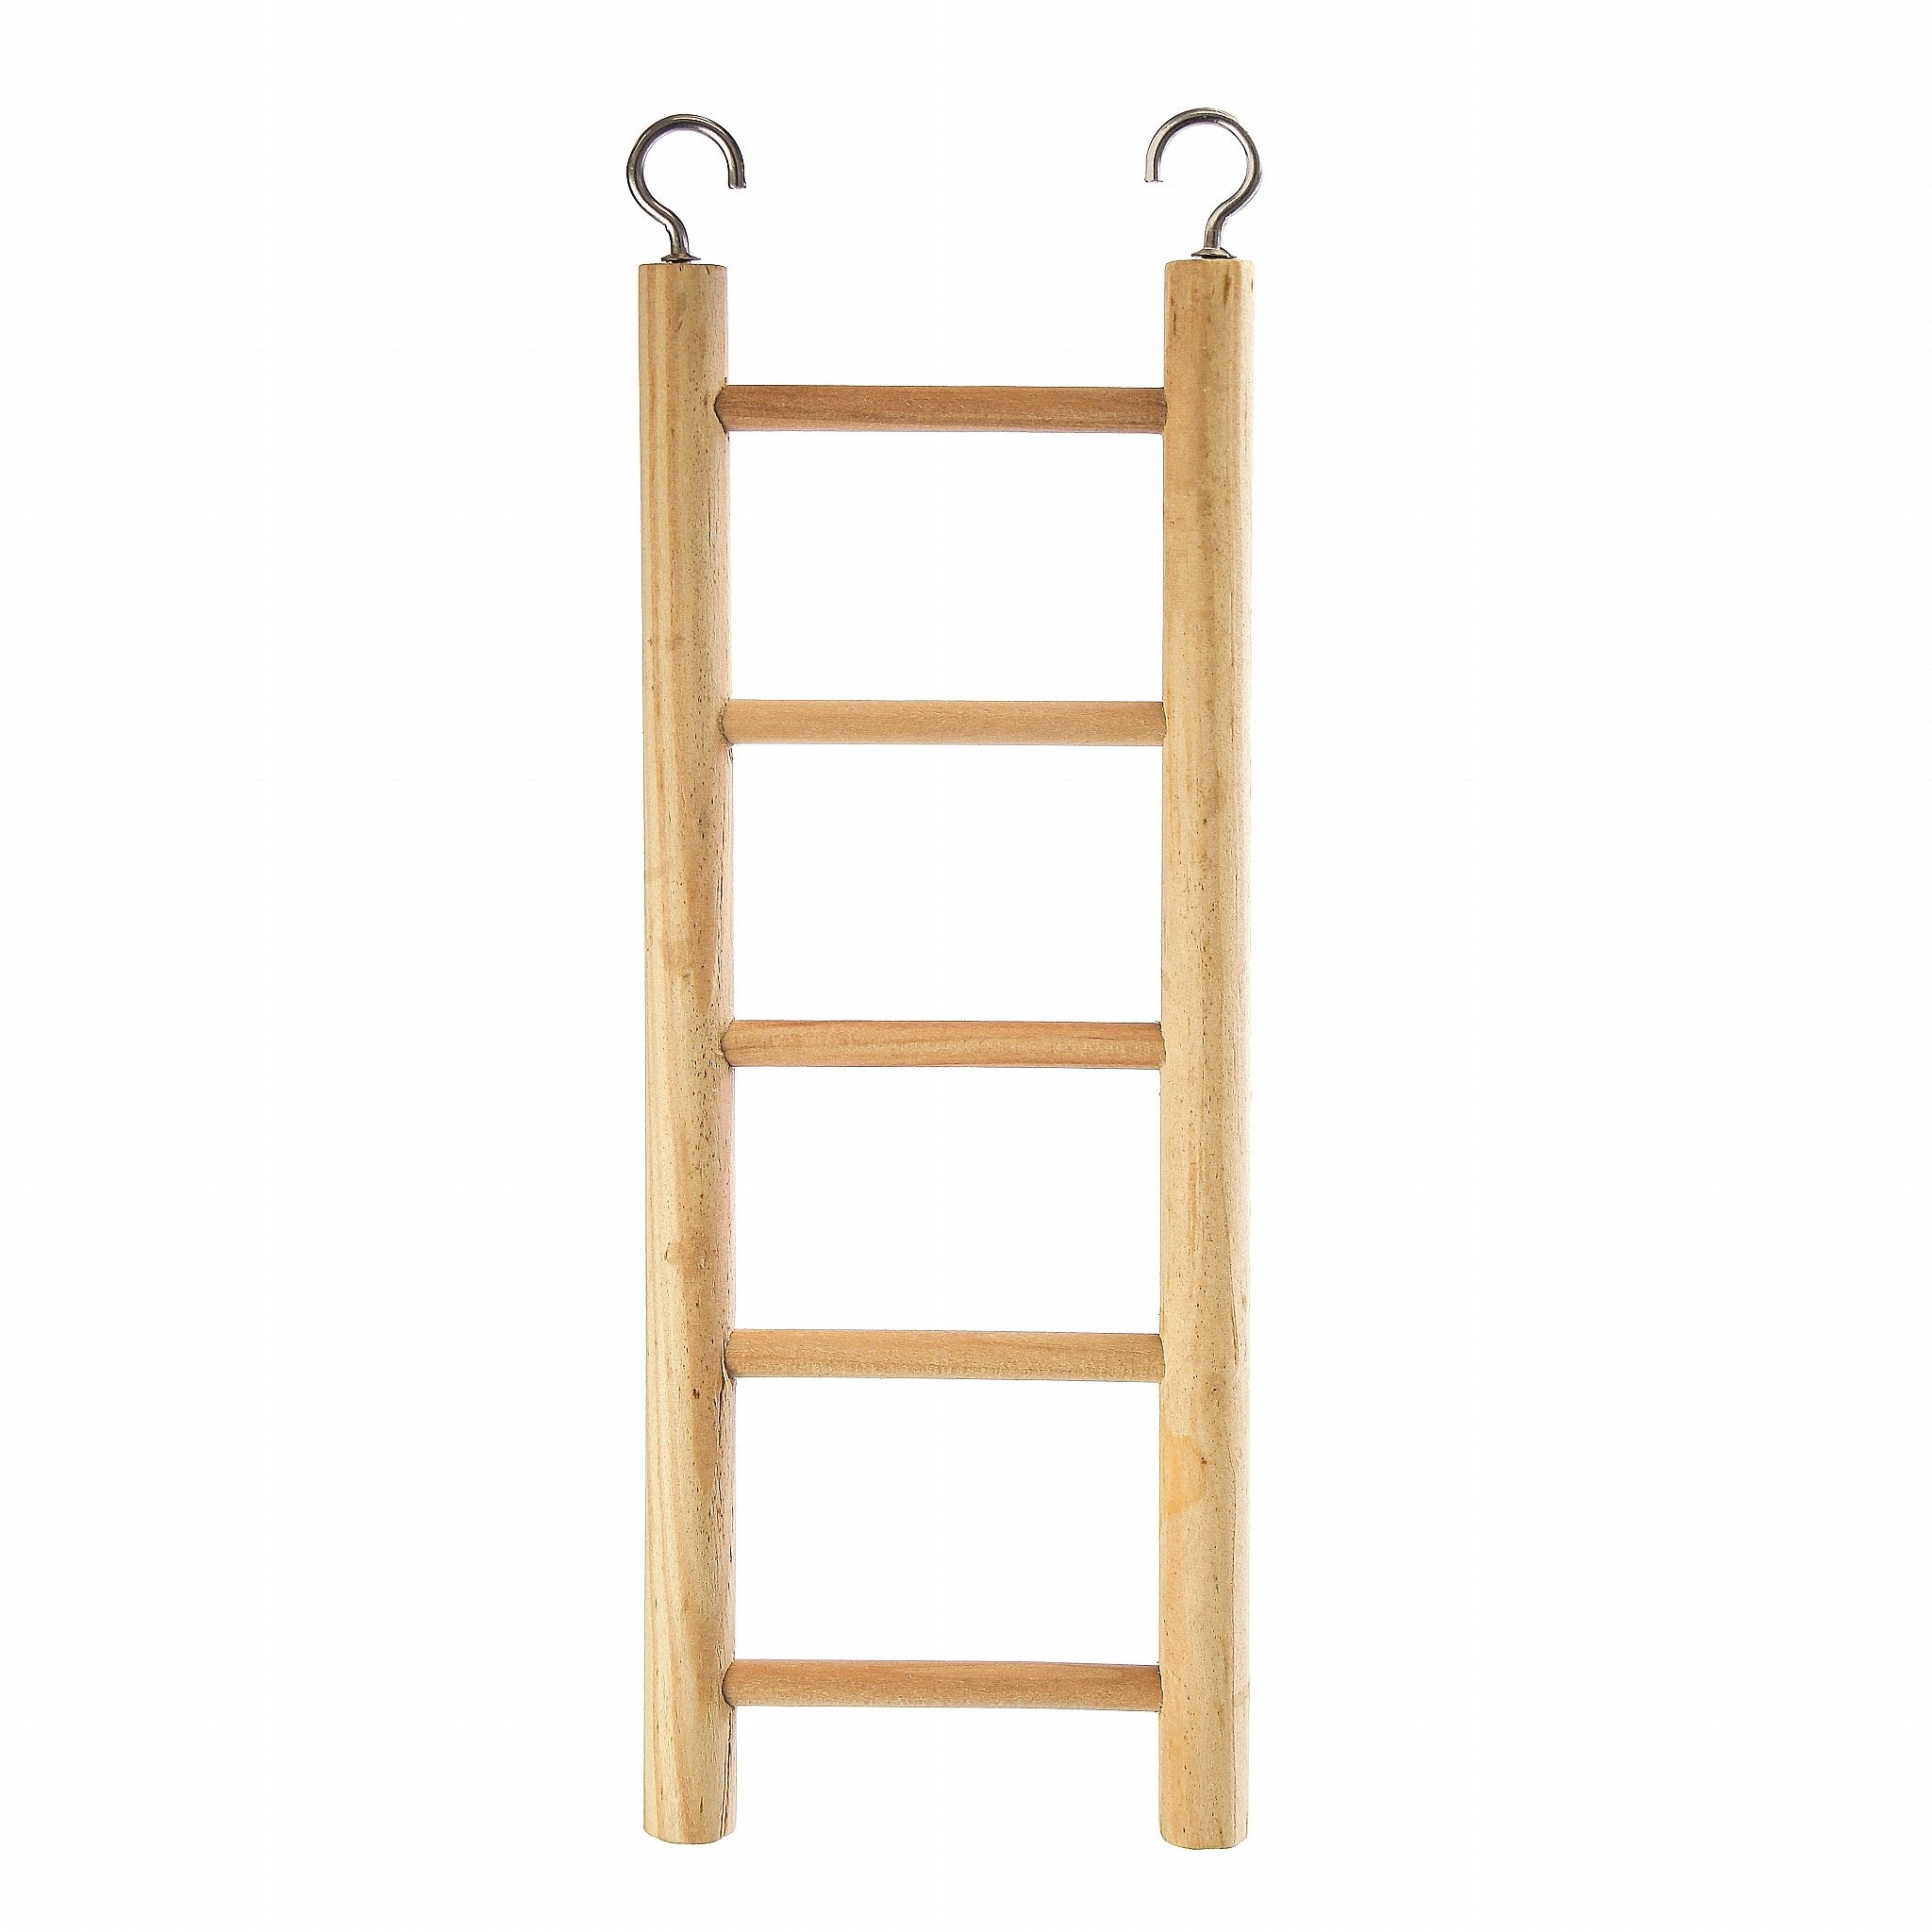 Bainbridge Wooden Bird Ladder